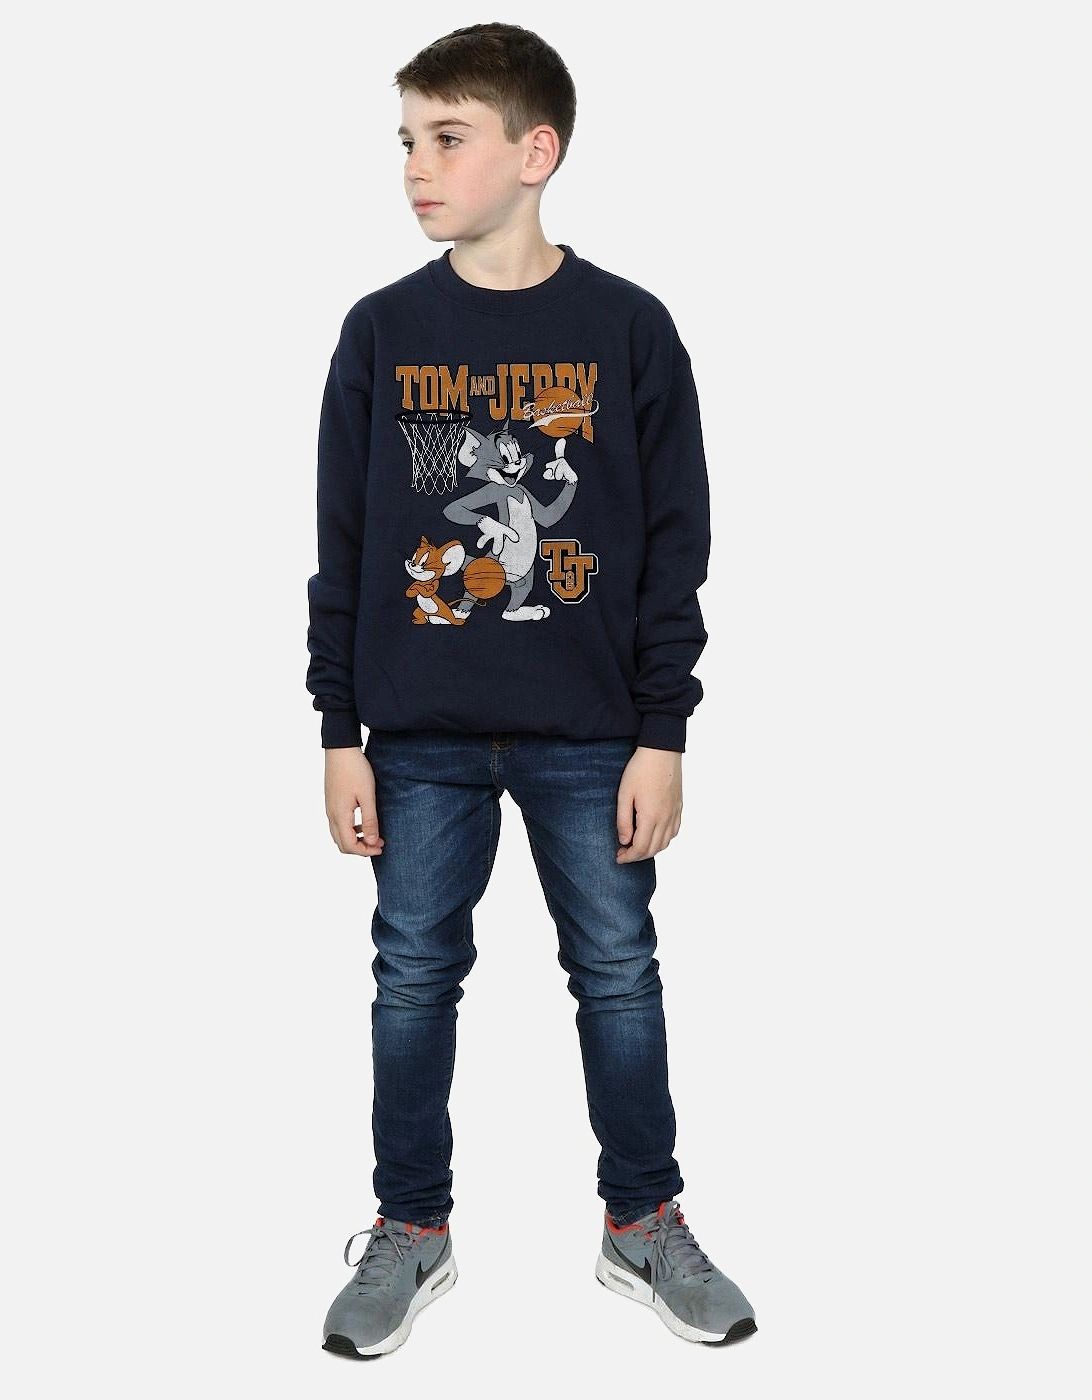 Tom and Jerry Boys Spinning Basketball Sweatshirt